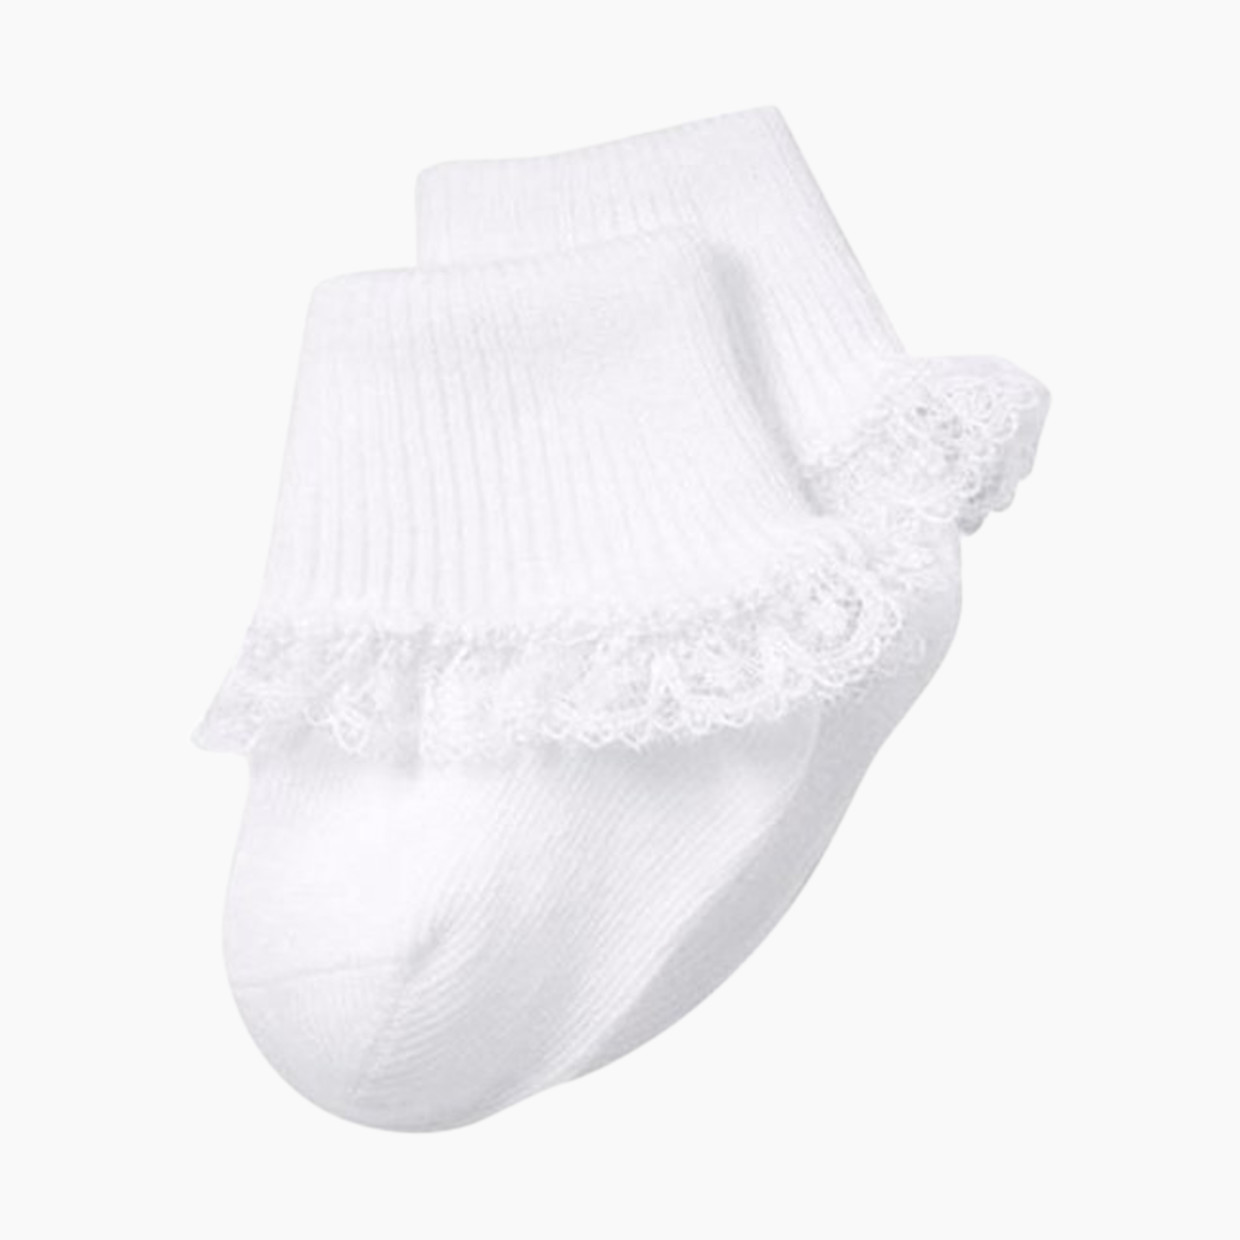 Jefferies Socks Simplicity Lace Socks - White, 0-6 Months.